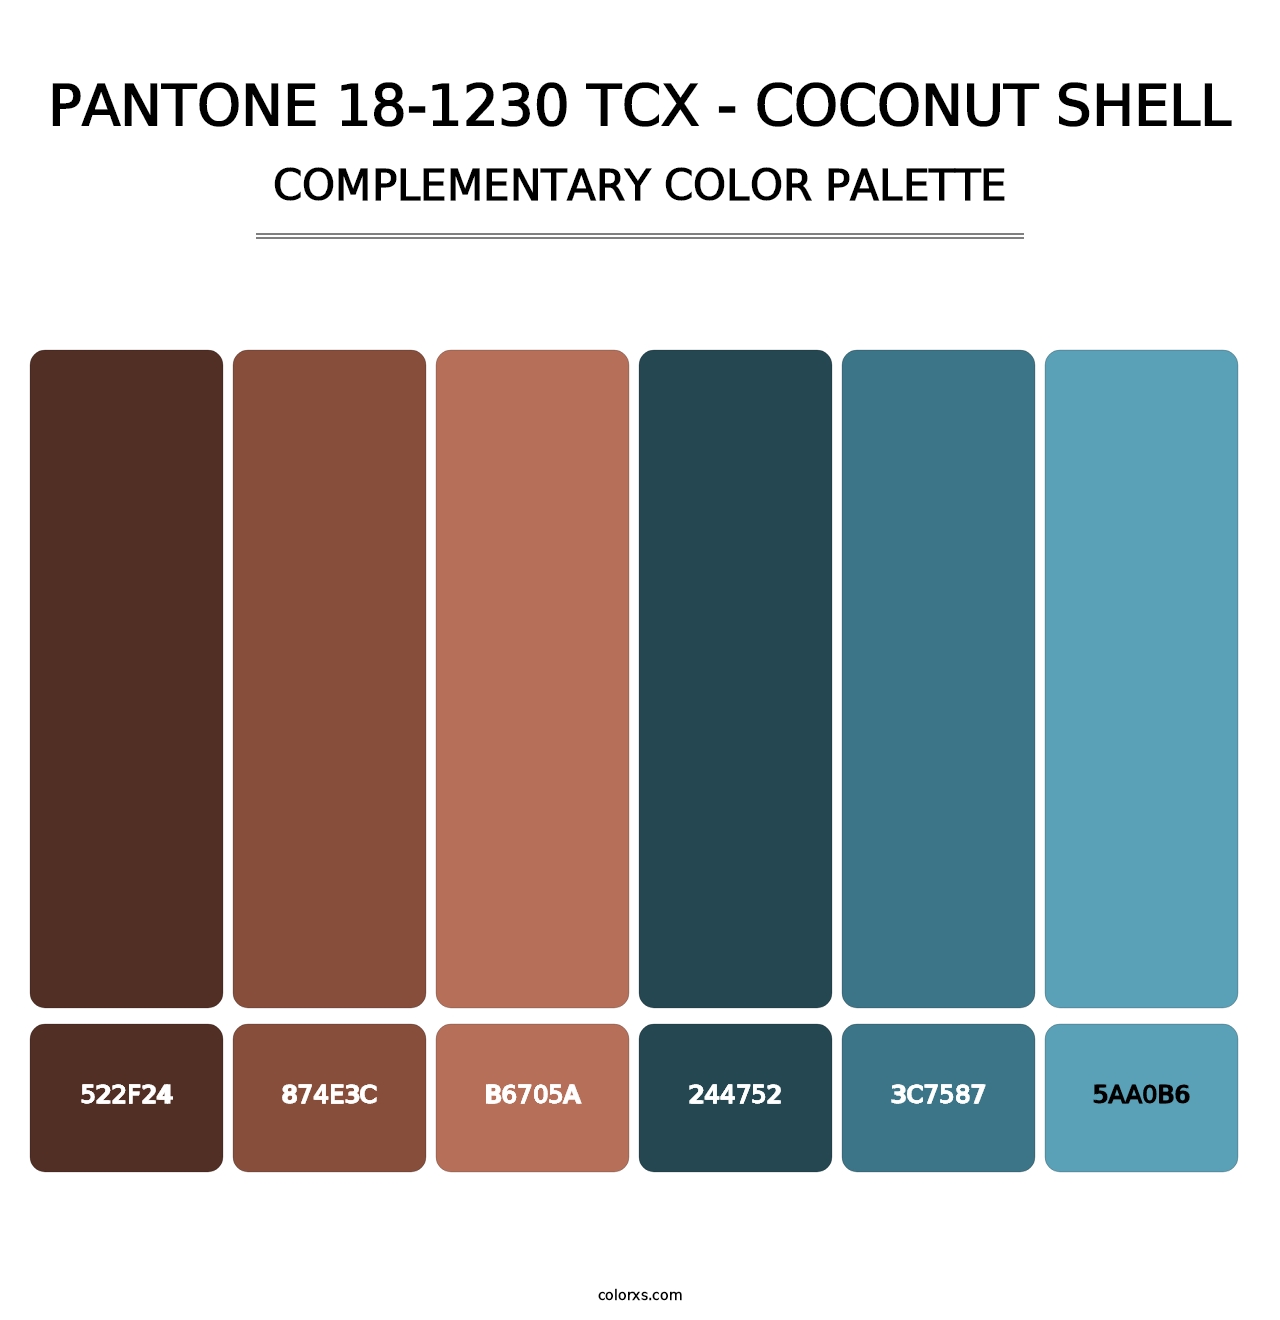 PANTONE 18-1230 TCX - Coconut Shell - Complementary Color Palette